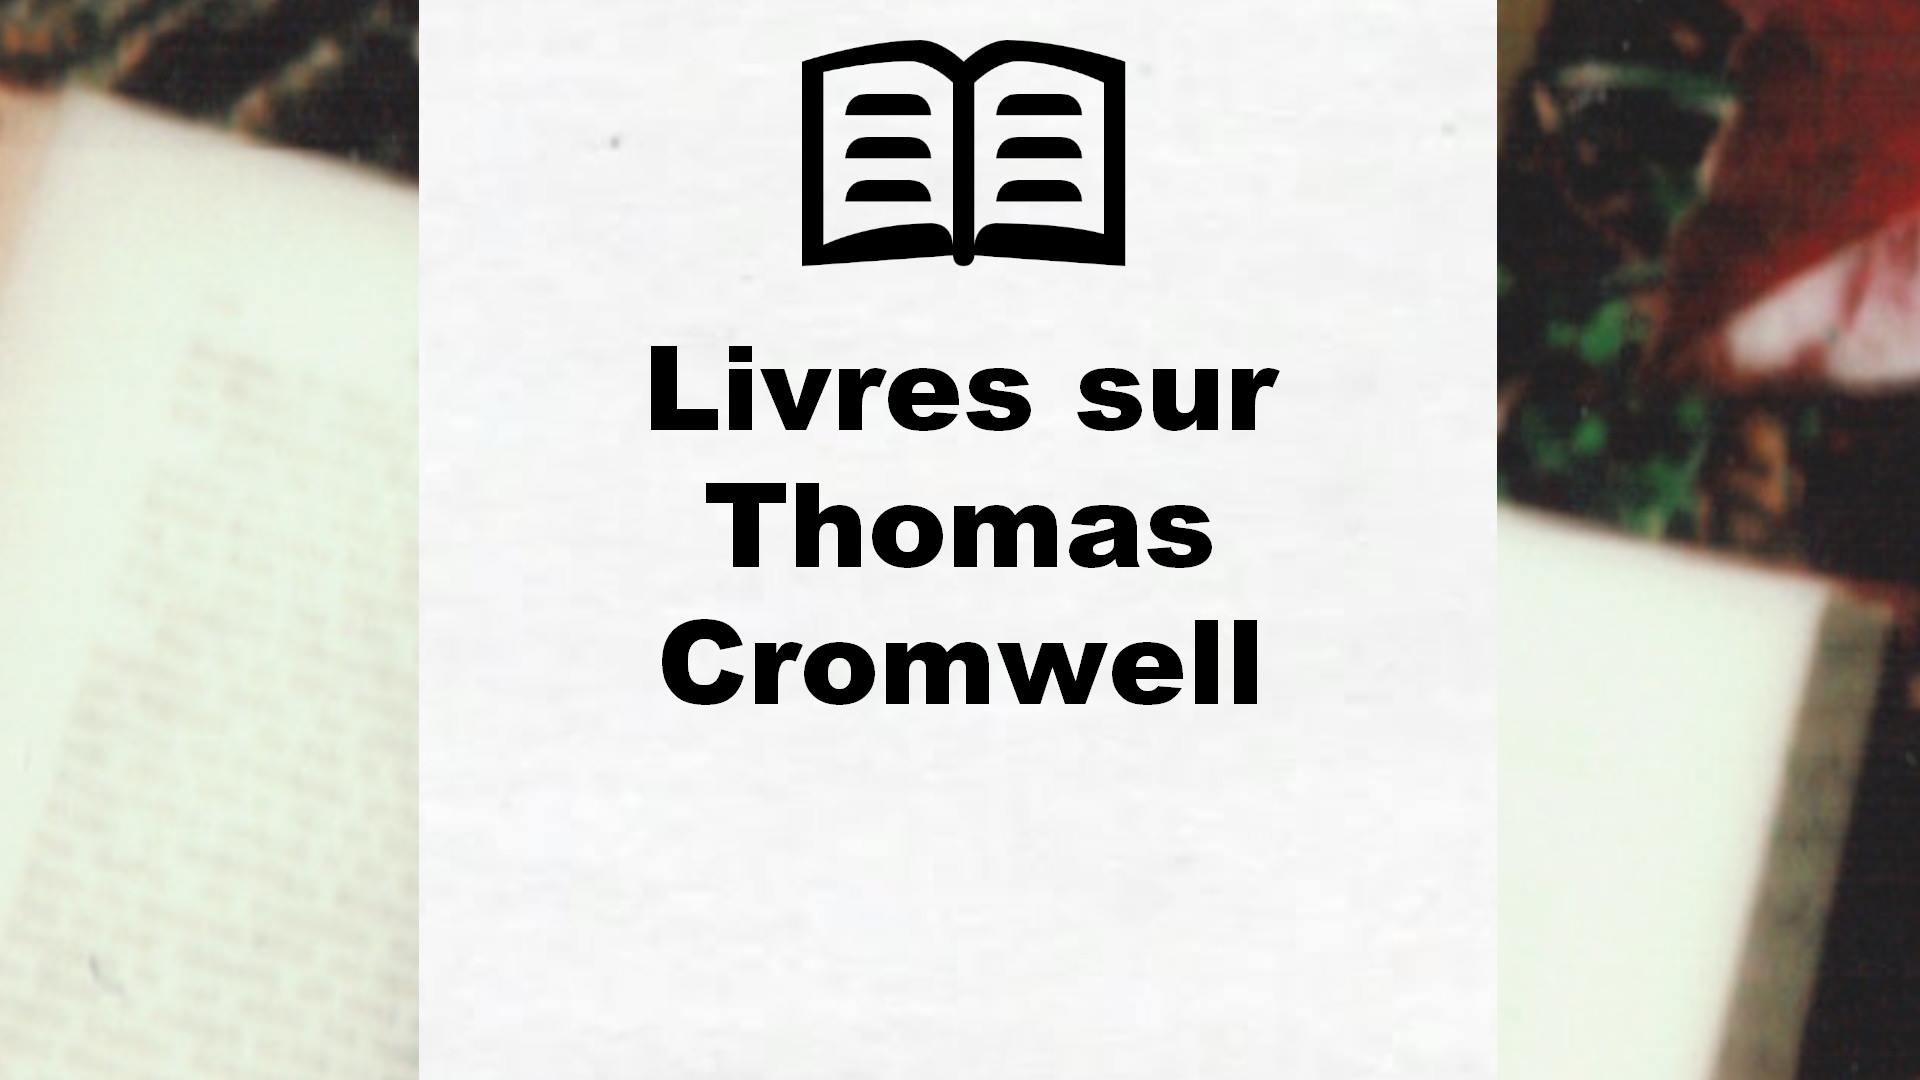 Livres sur Thomas Cromwell